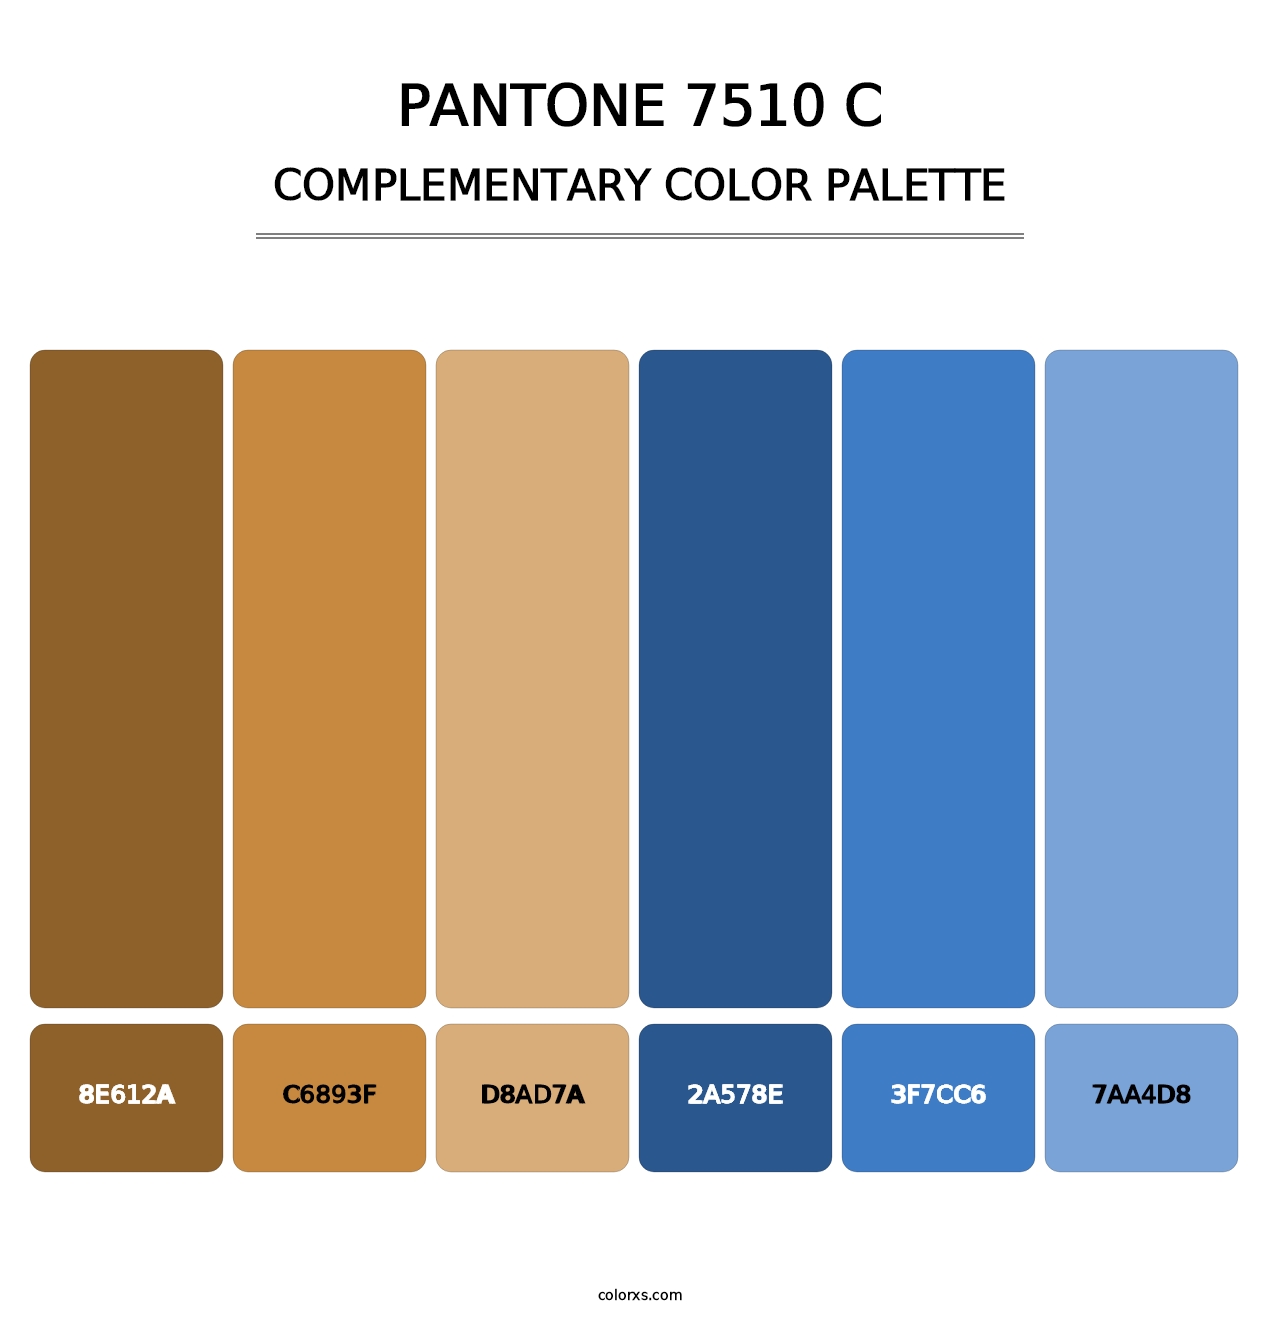 PANTONE 7510 C - Complementary Color Palette